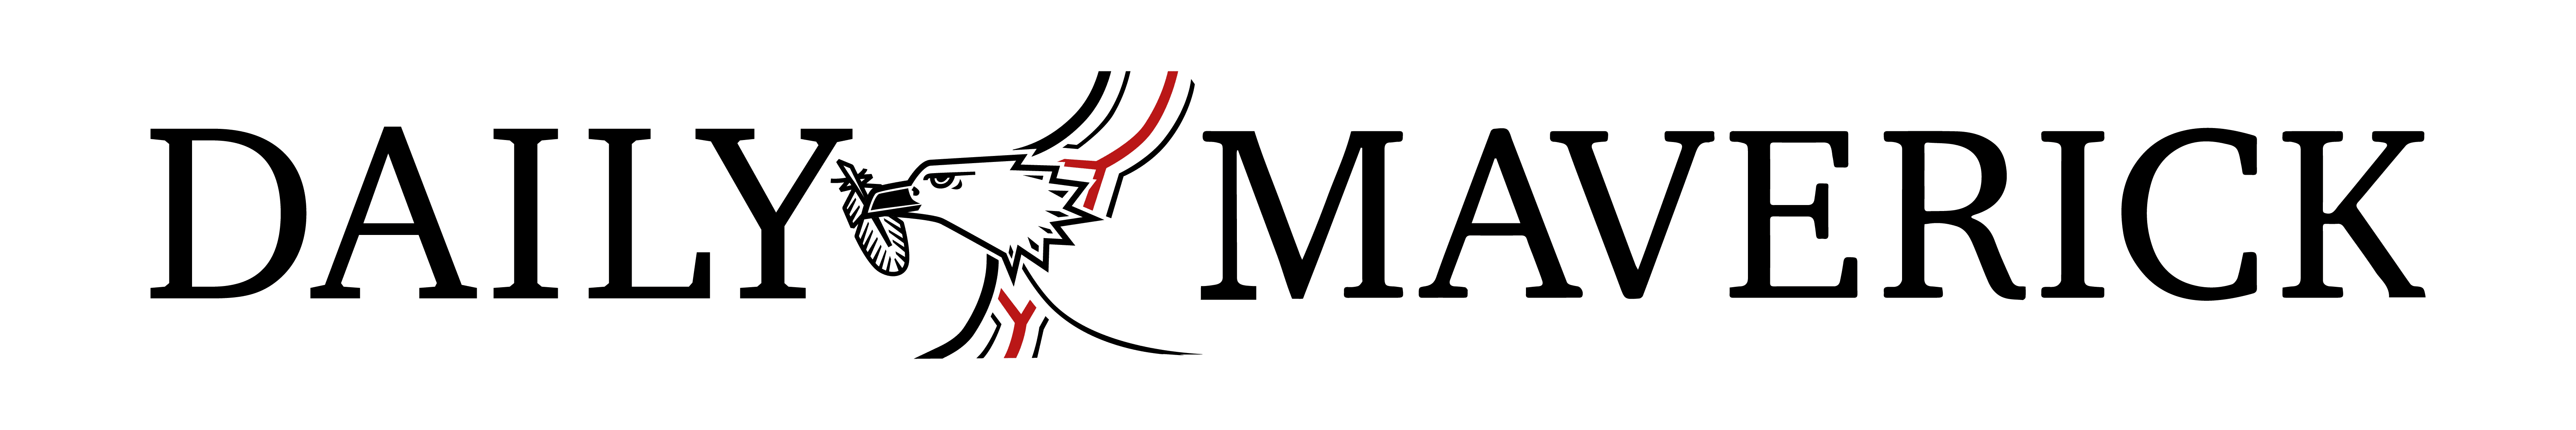 DailyMaverick logo